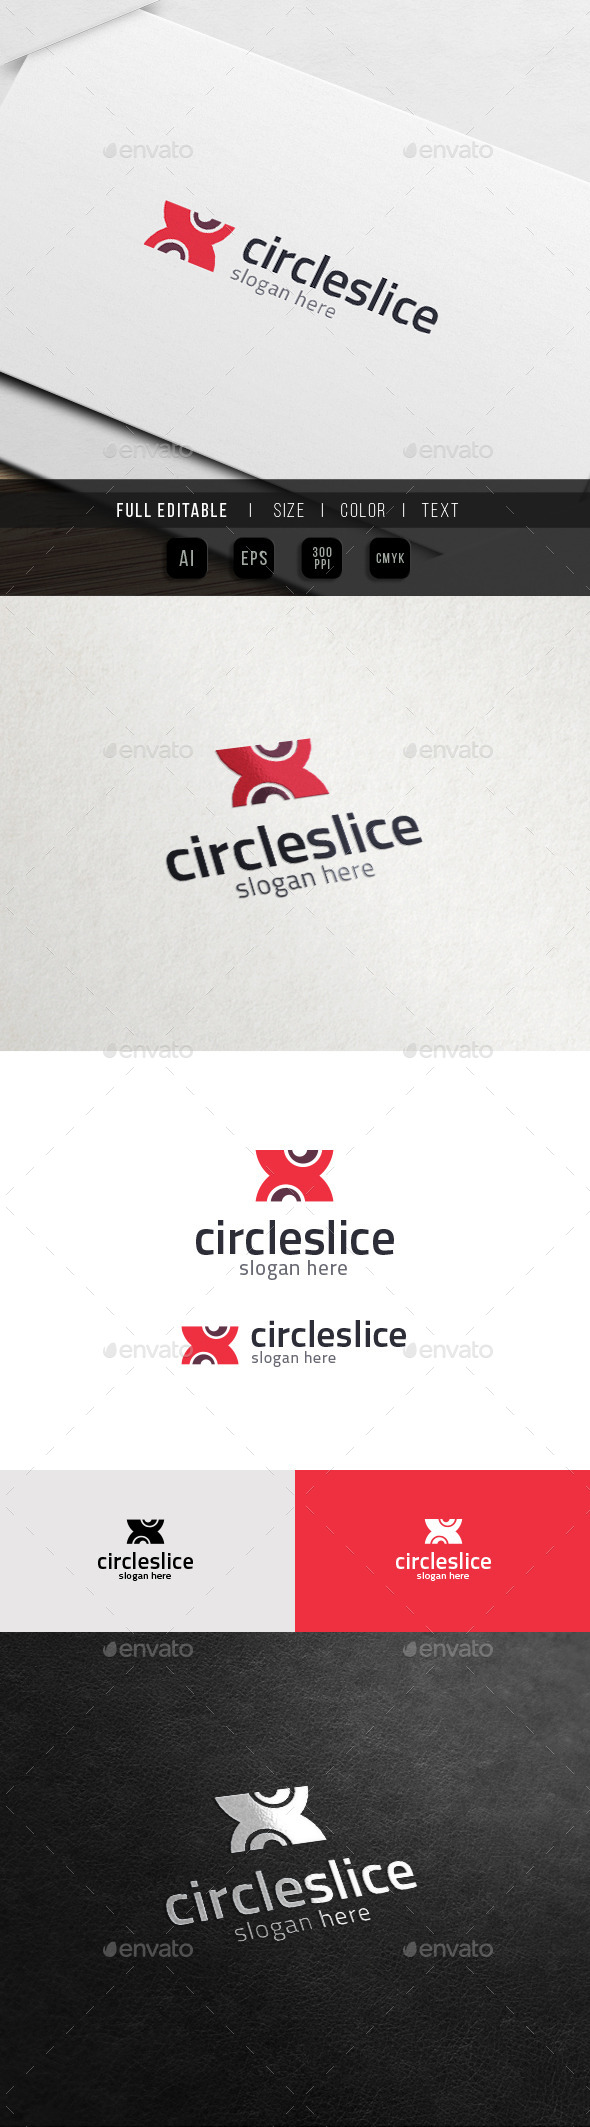 X Slice - Half Circle Cafe Logo